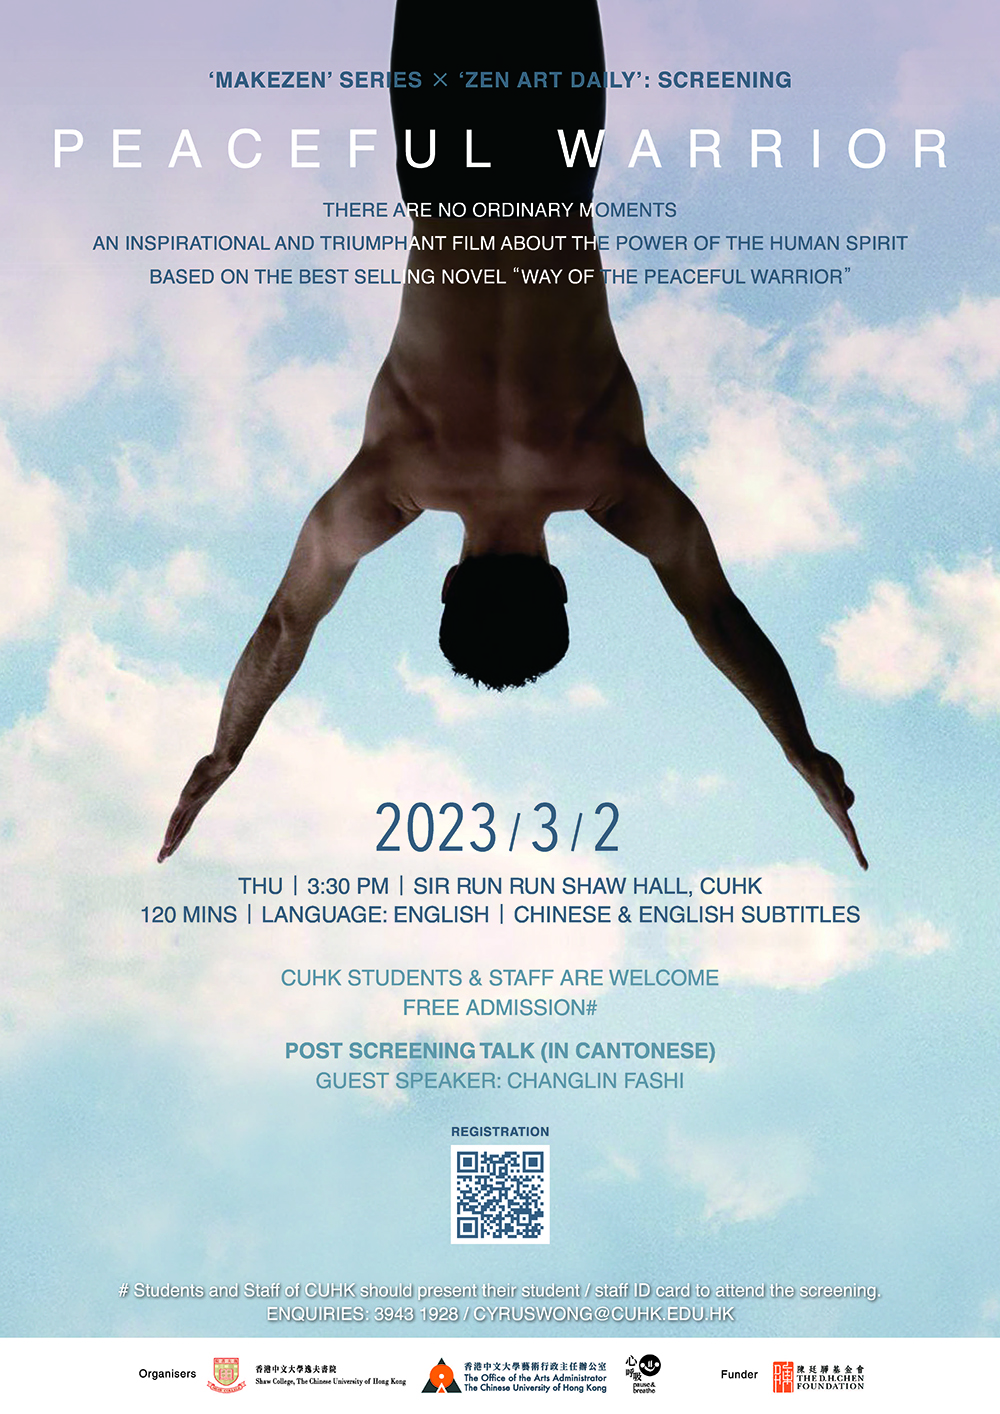 ‘MakeZen' Series x 'Zen Art Daily': Screening - Peaceful Warrior